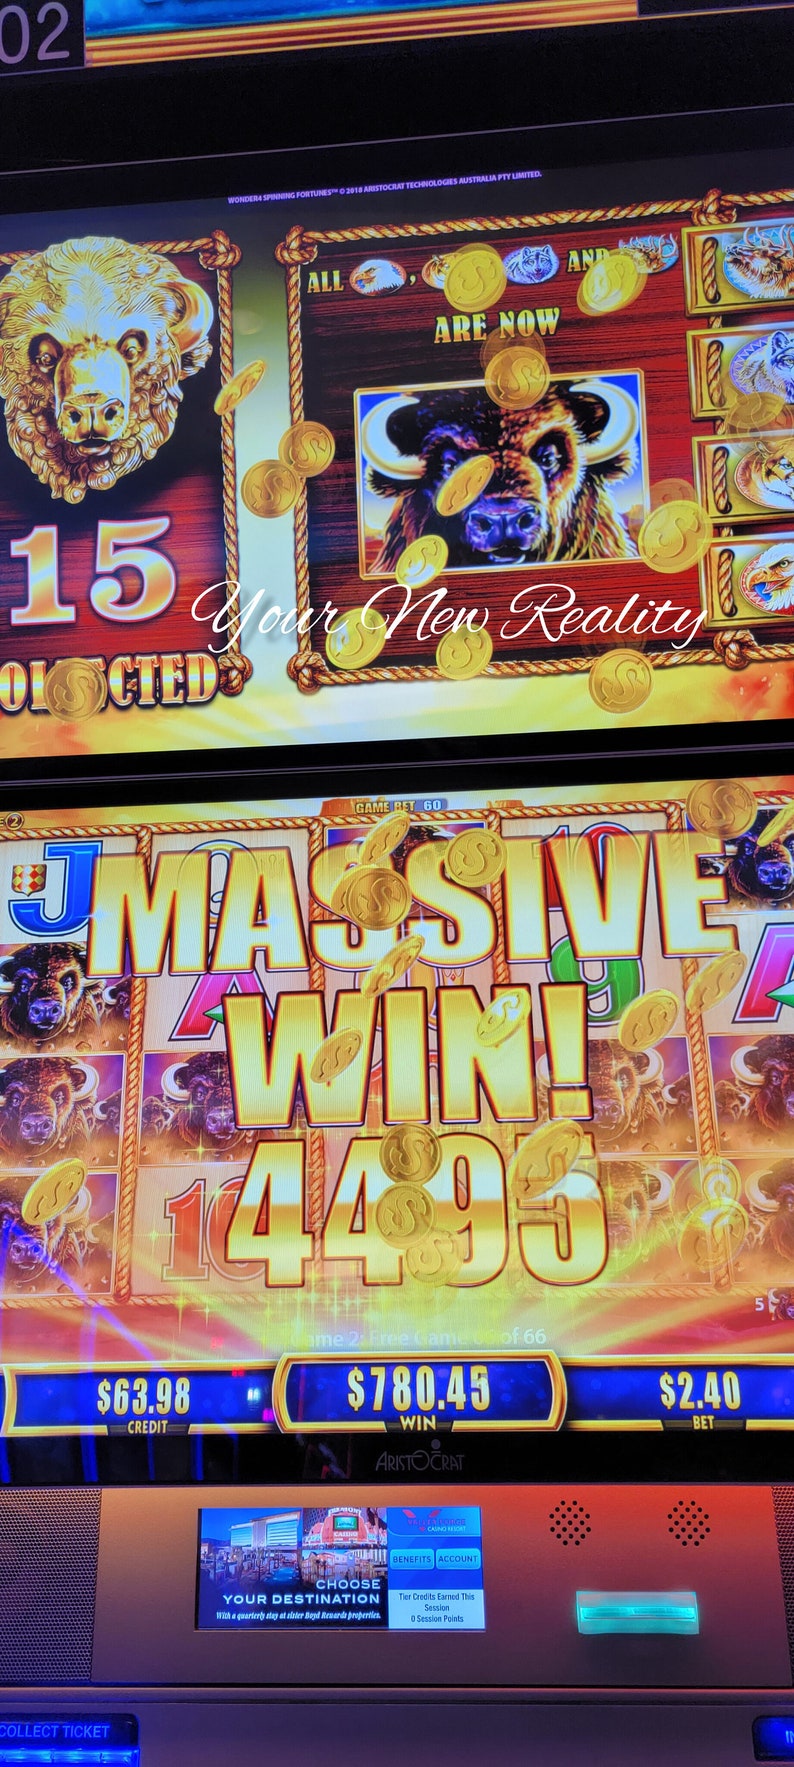 Get Huge Wins on Buffalo Slot Machines Subliminal Affirmations Audio Listen Once WAV & MP3 image 2